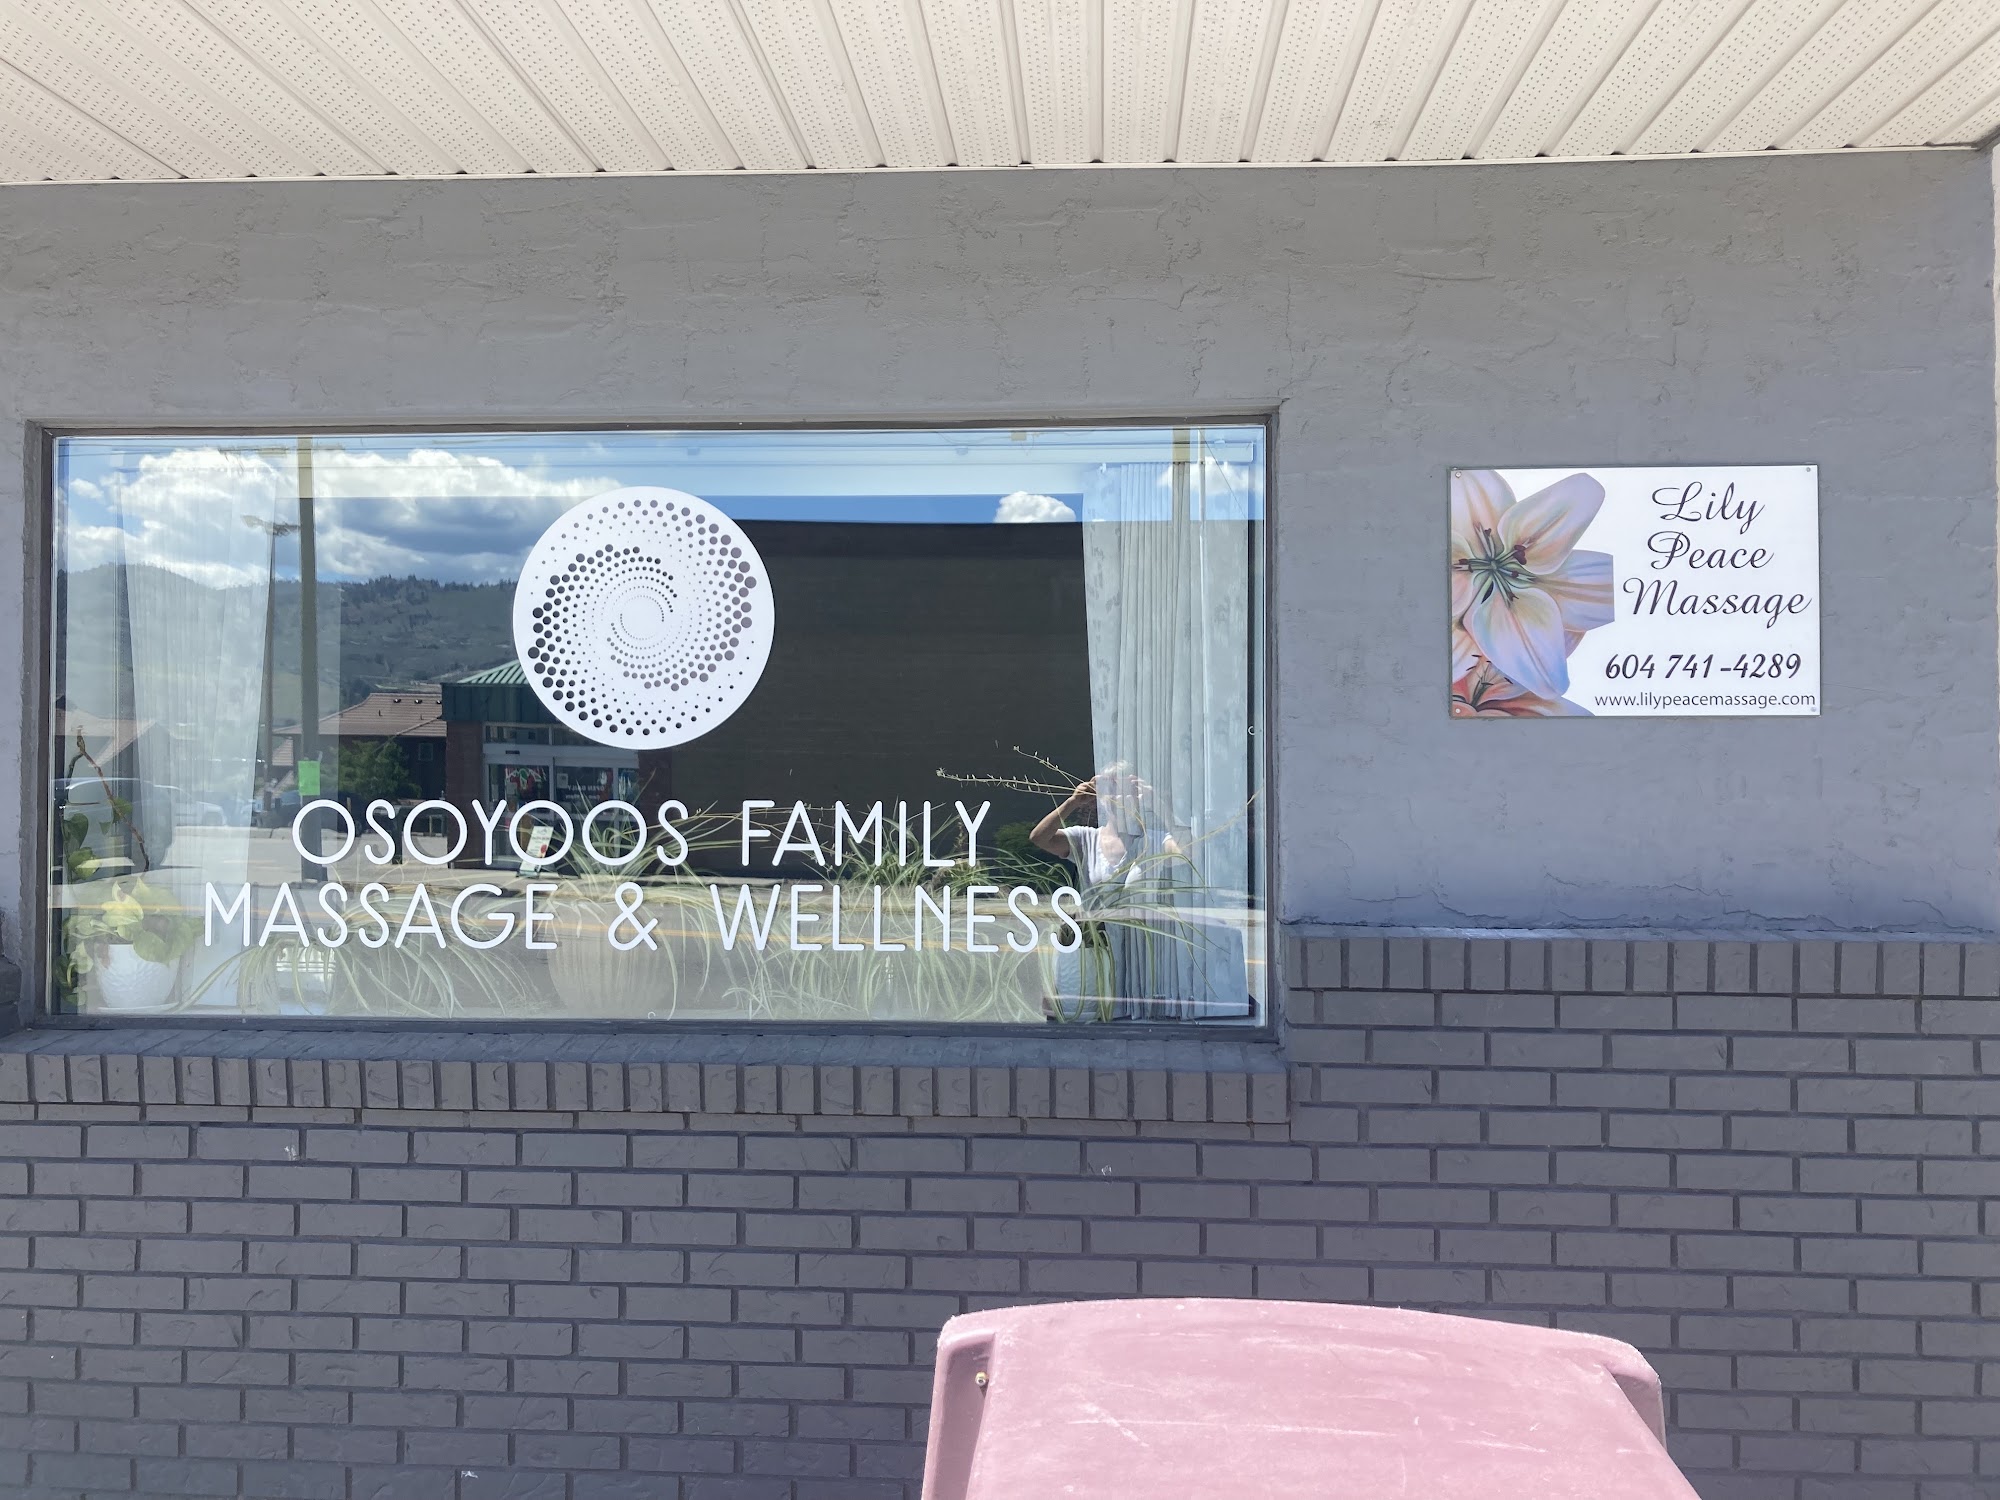 Lily Peace Massage & Spa 8127 Main St, Osoyoos British Columbia V0H 1V0